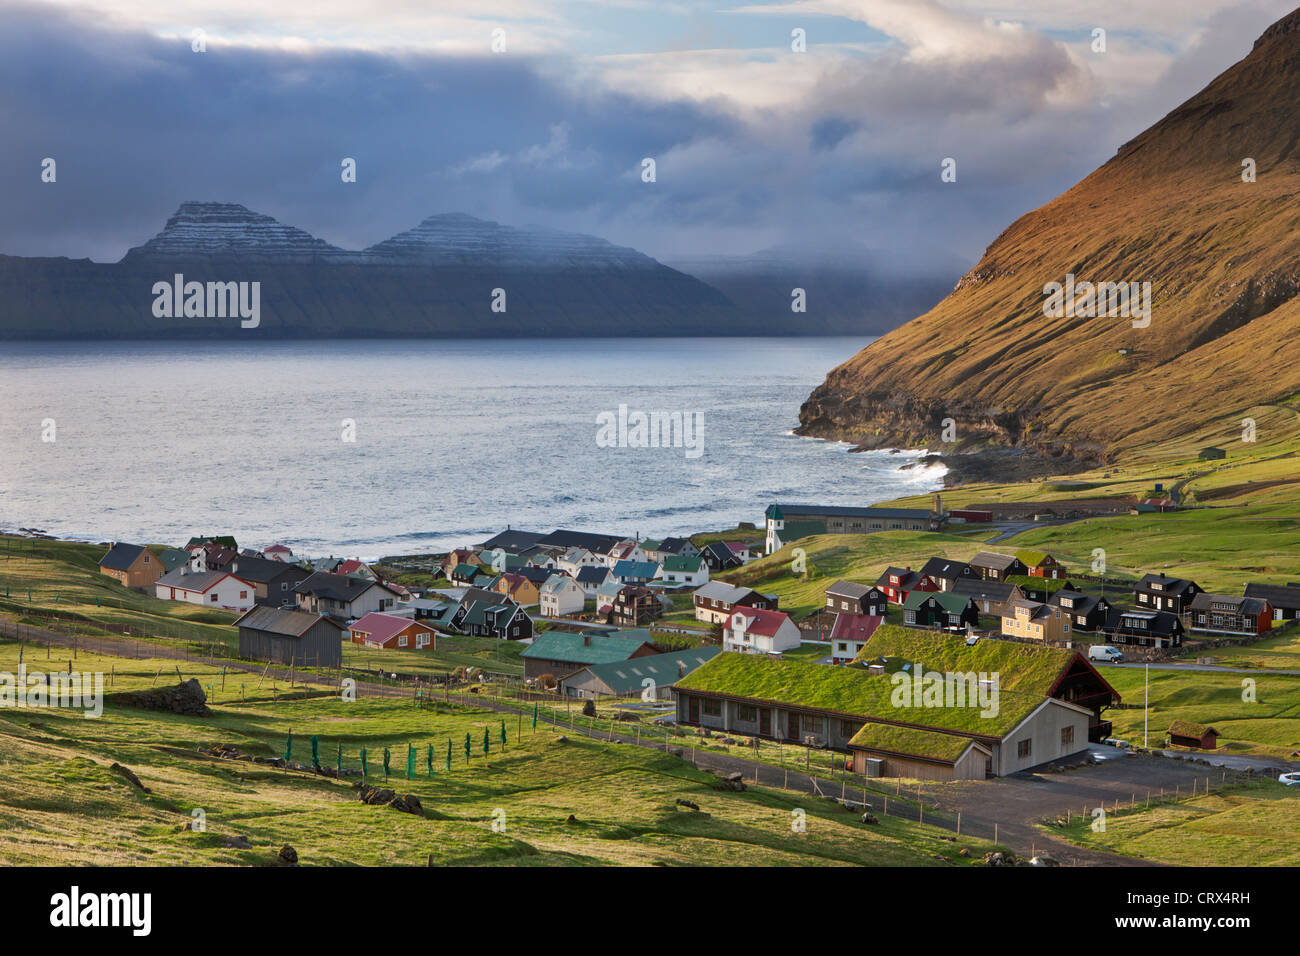 Picturesque village of Gjogv on the island of Eysturoy, Faroe Islands. Spring (June) 2012. Stock Photo